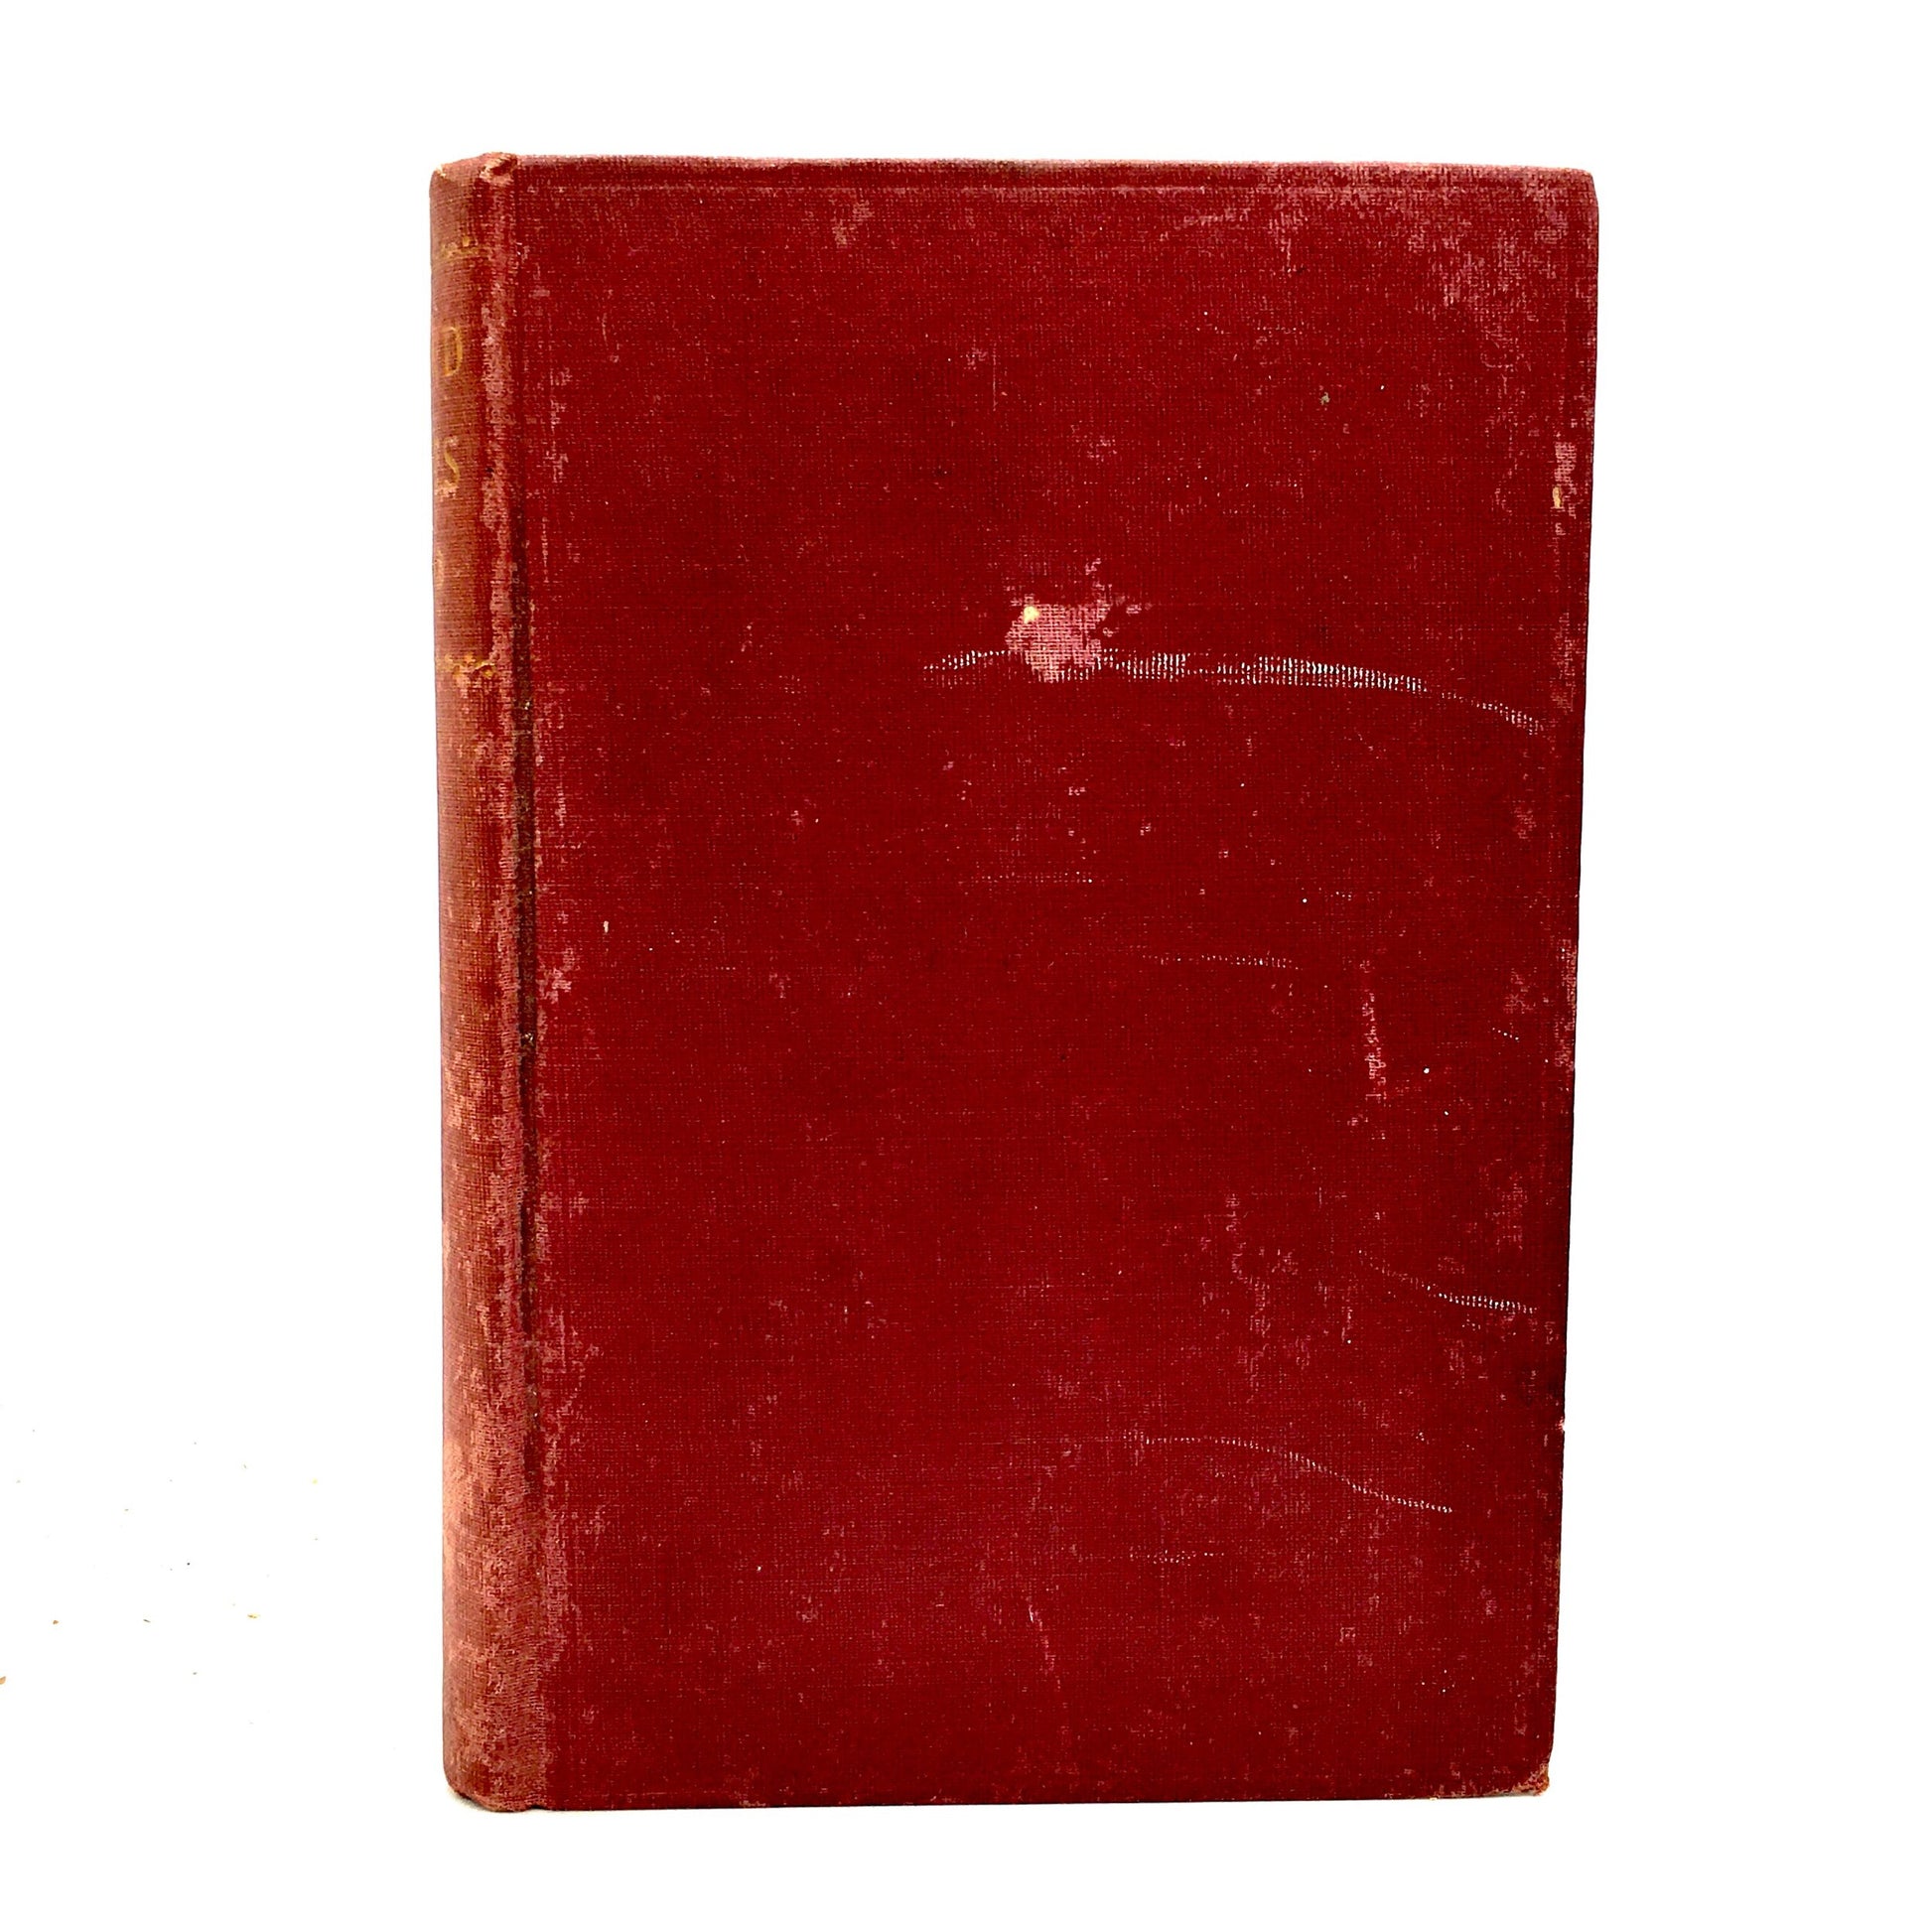 DUMAS, Alexandre “Edmond Dantès, The Sequel to The Count of Monte Cristo" [Thompson & Thomas, c1890s] - Buzz Bookstore